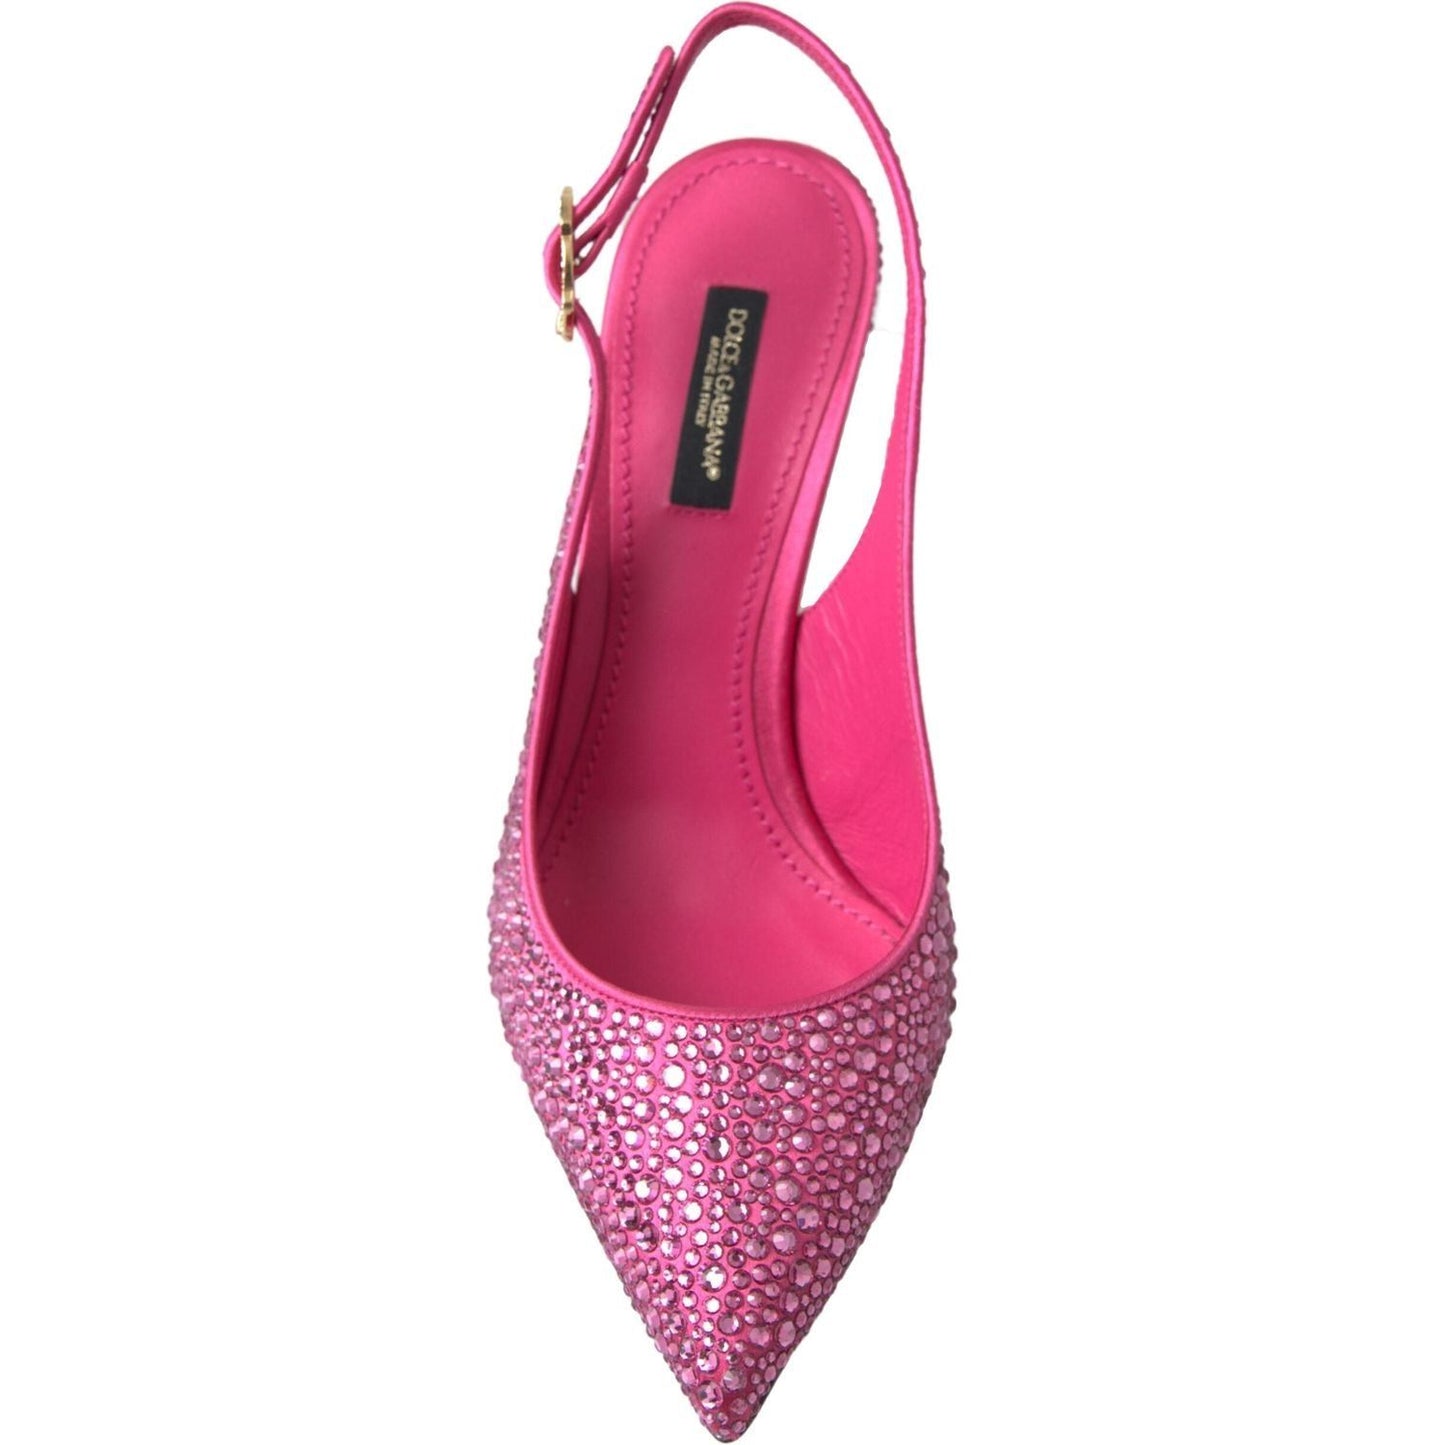 Dolce & Gabbana Elegant Slingback Heels in Pink Silk Blend pink-slingbacks-crystal-pumps-shoes 465A0090-scaled-f061da8a-527.jpg